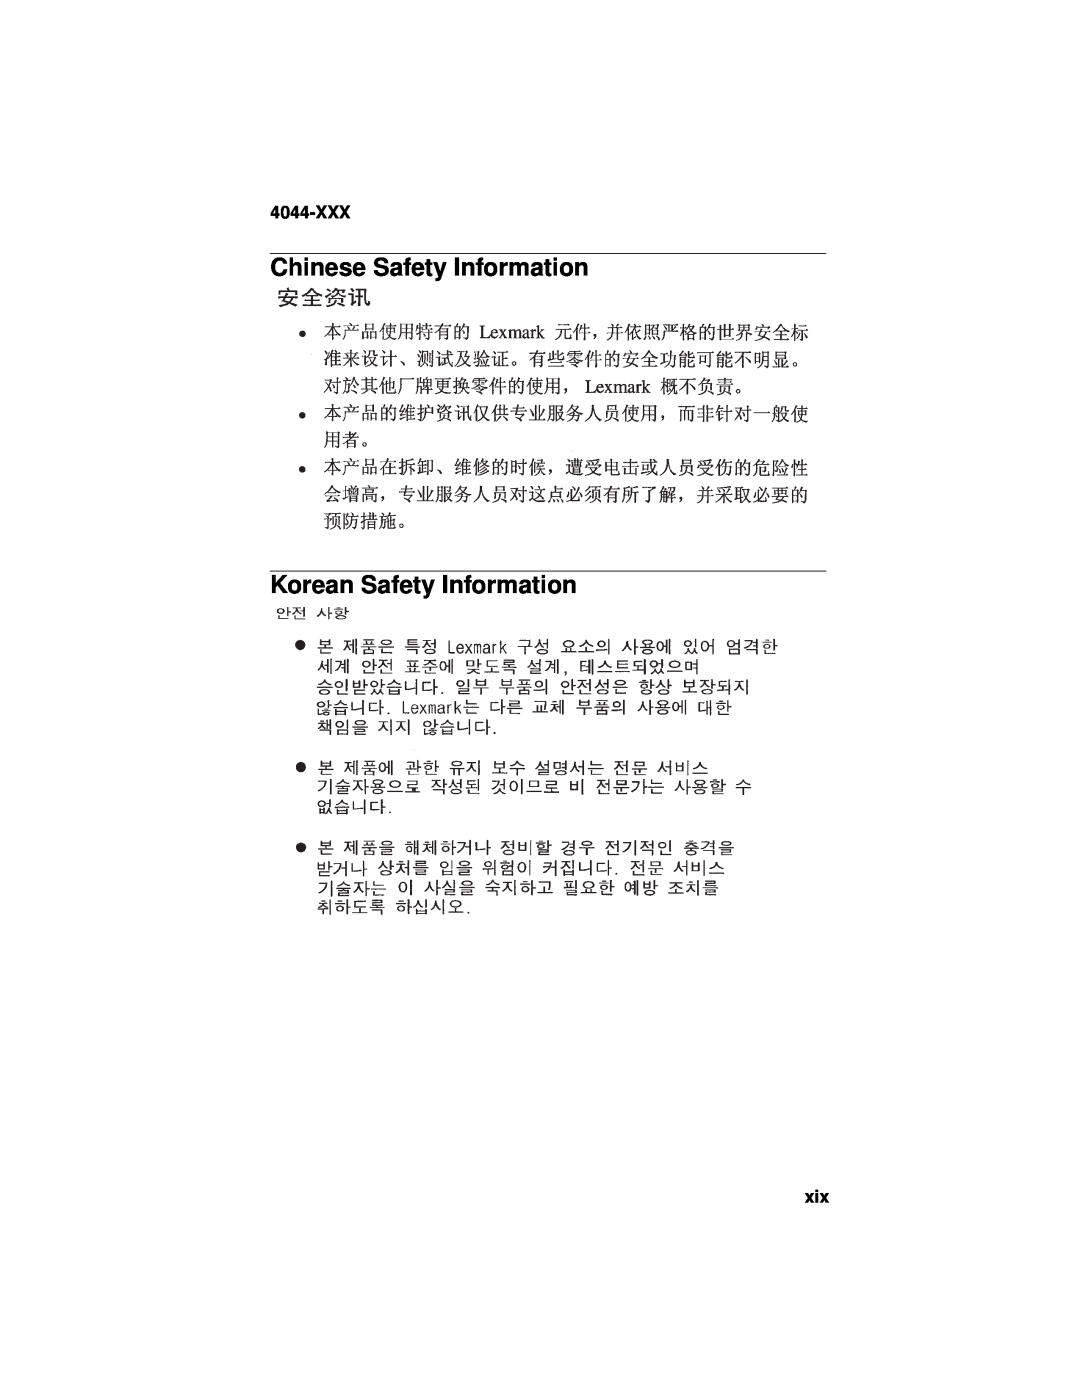 Lexmark E310 manual Chinese Safety Information, Korean Safety Information, 4044-XXX 